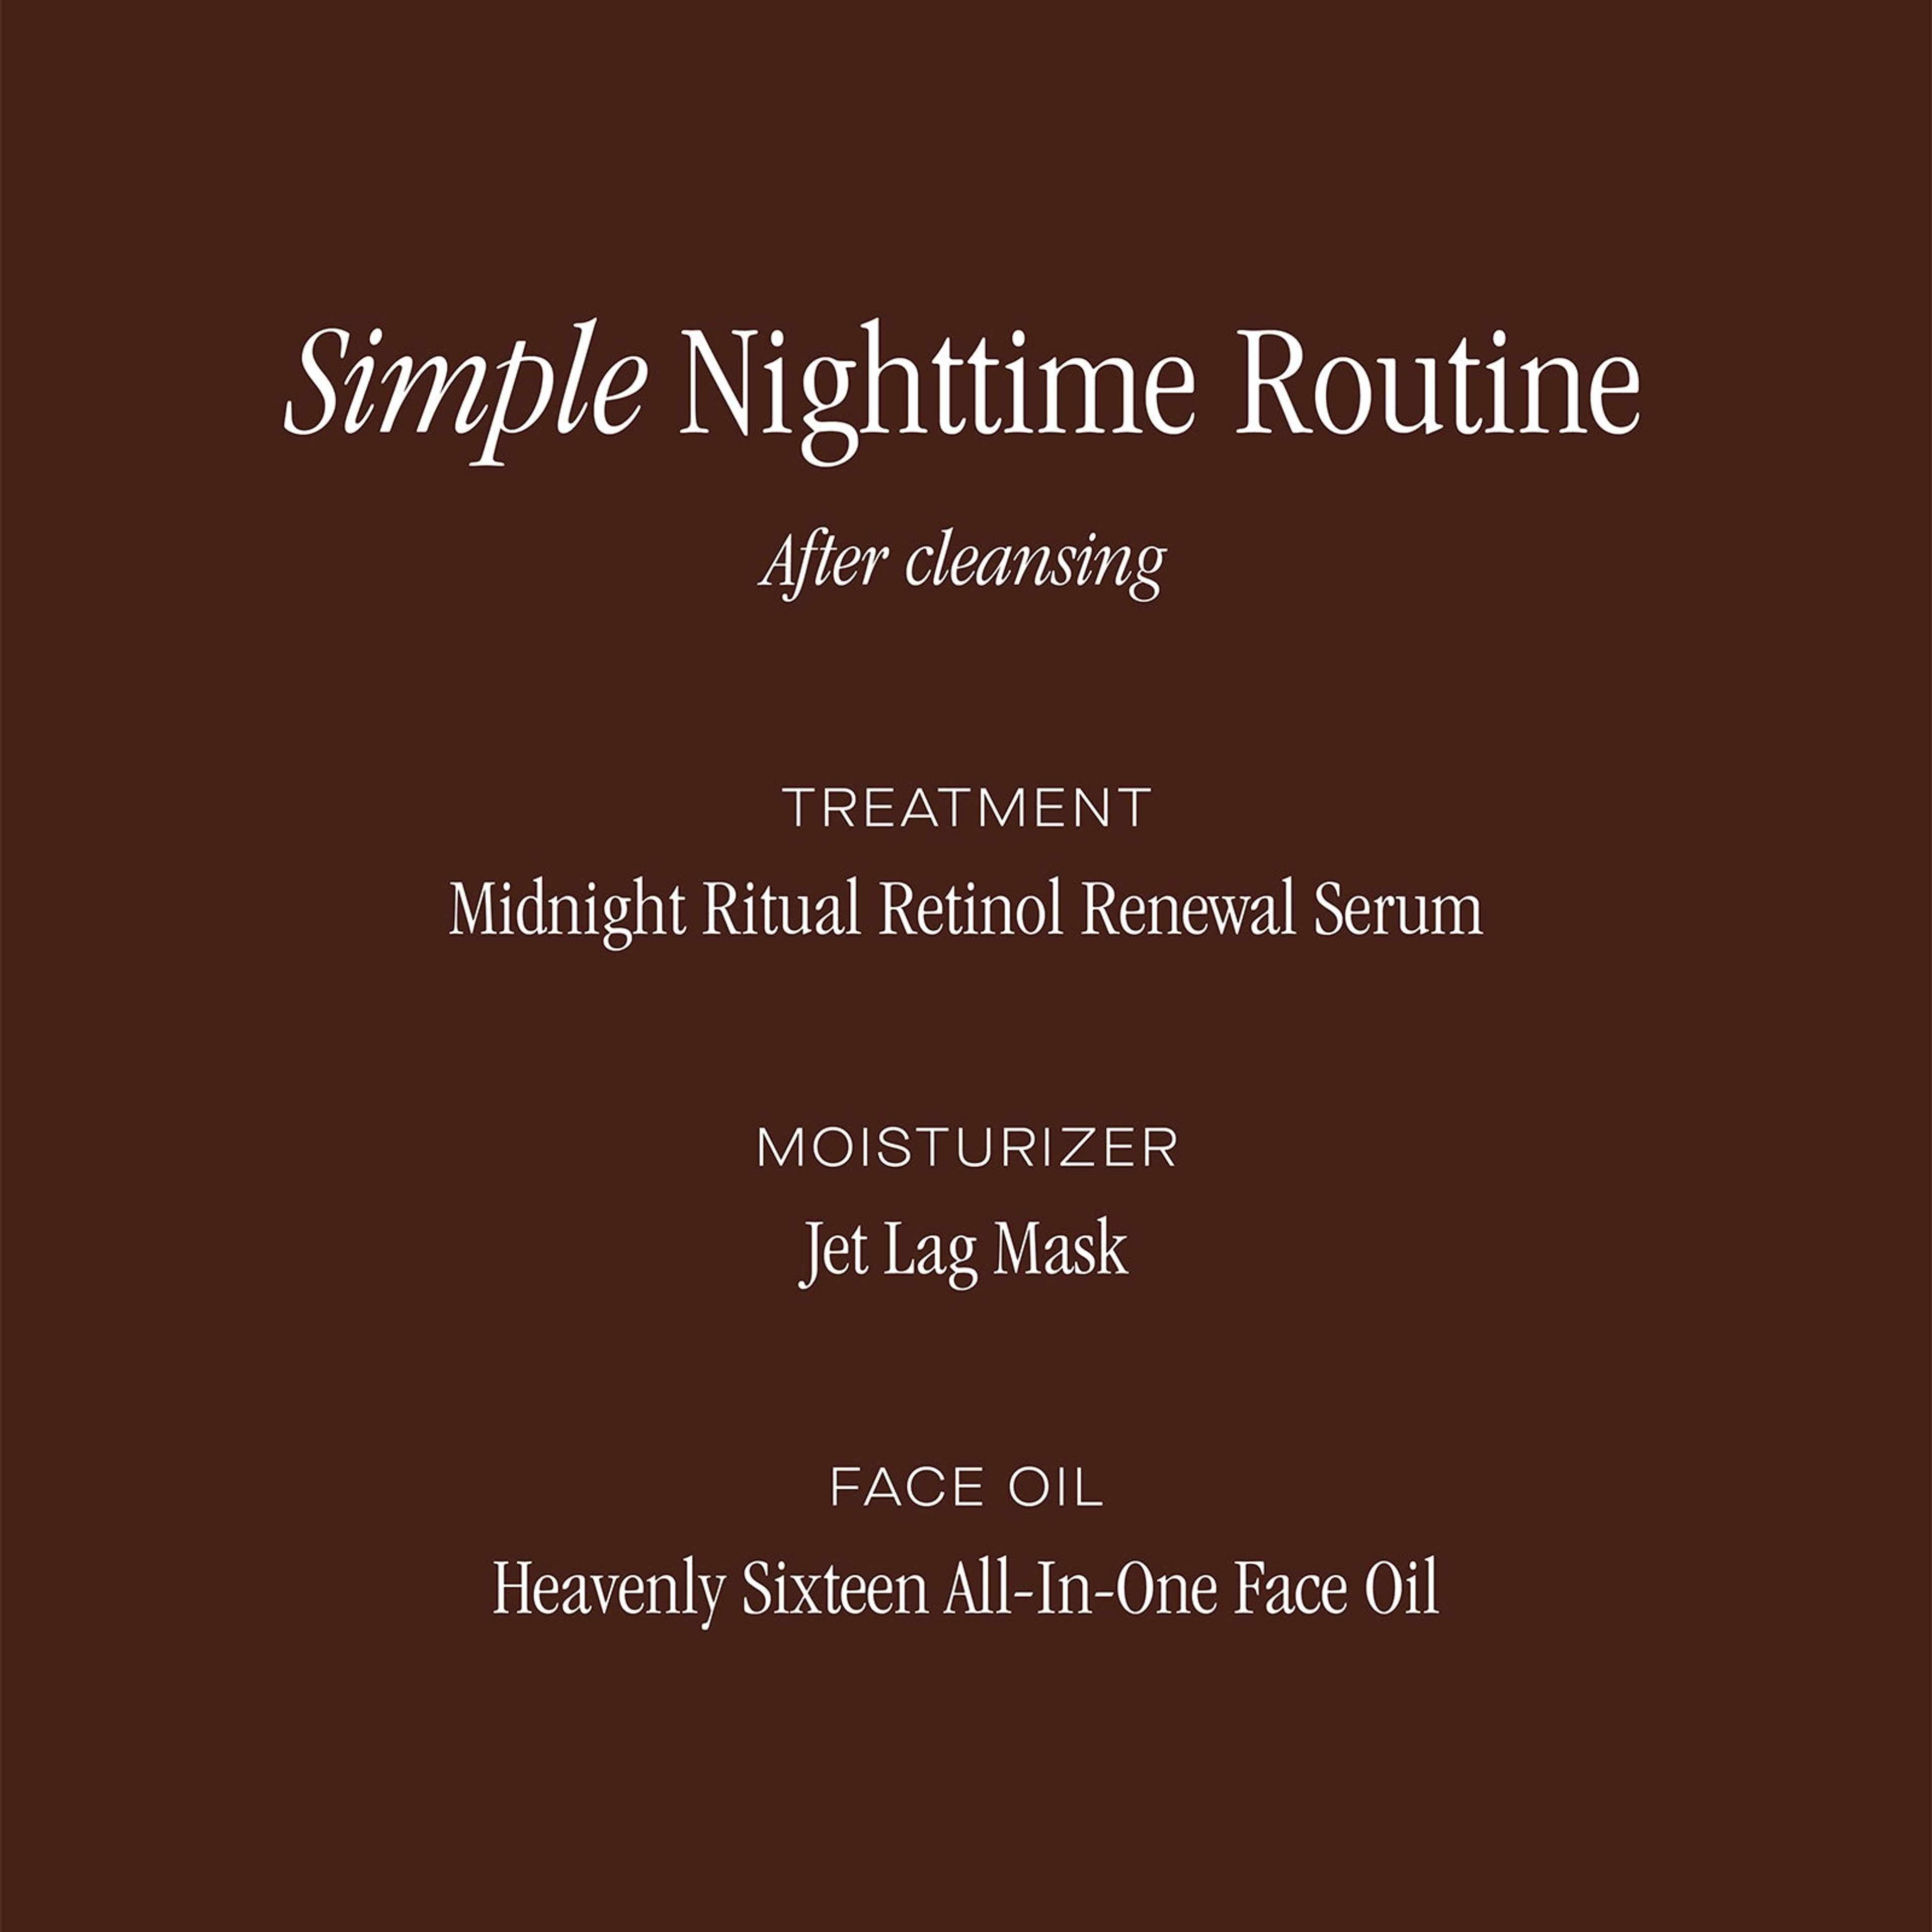 Simple Nighttime Routine